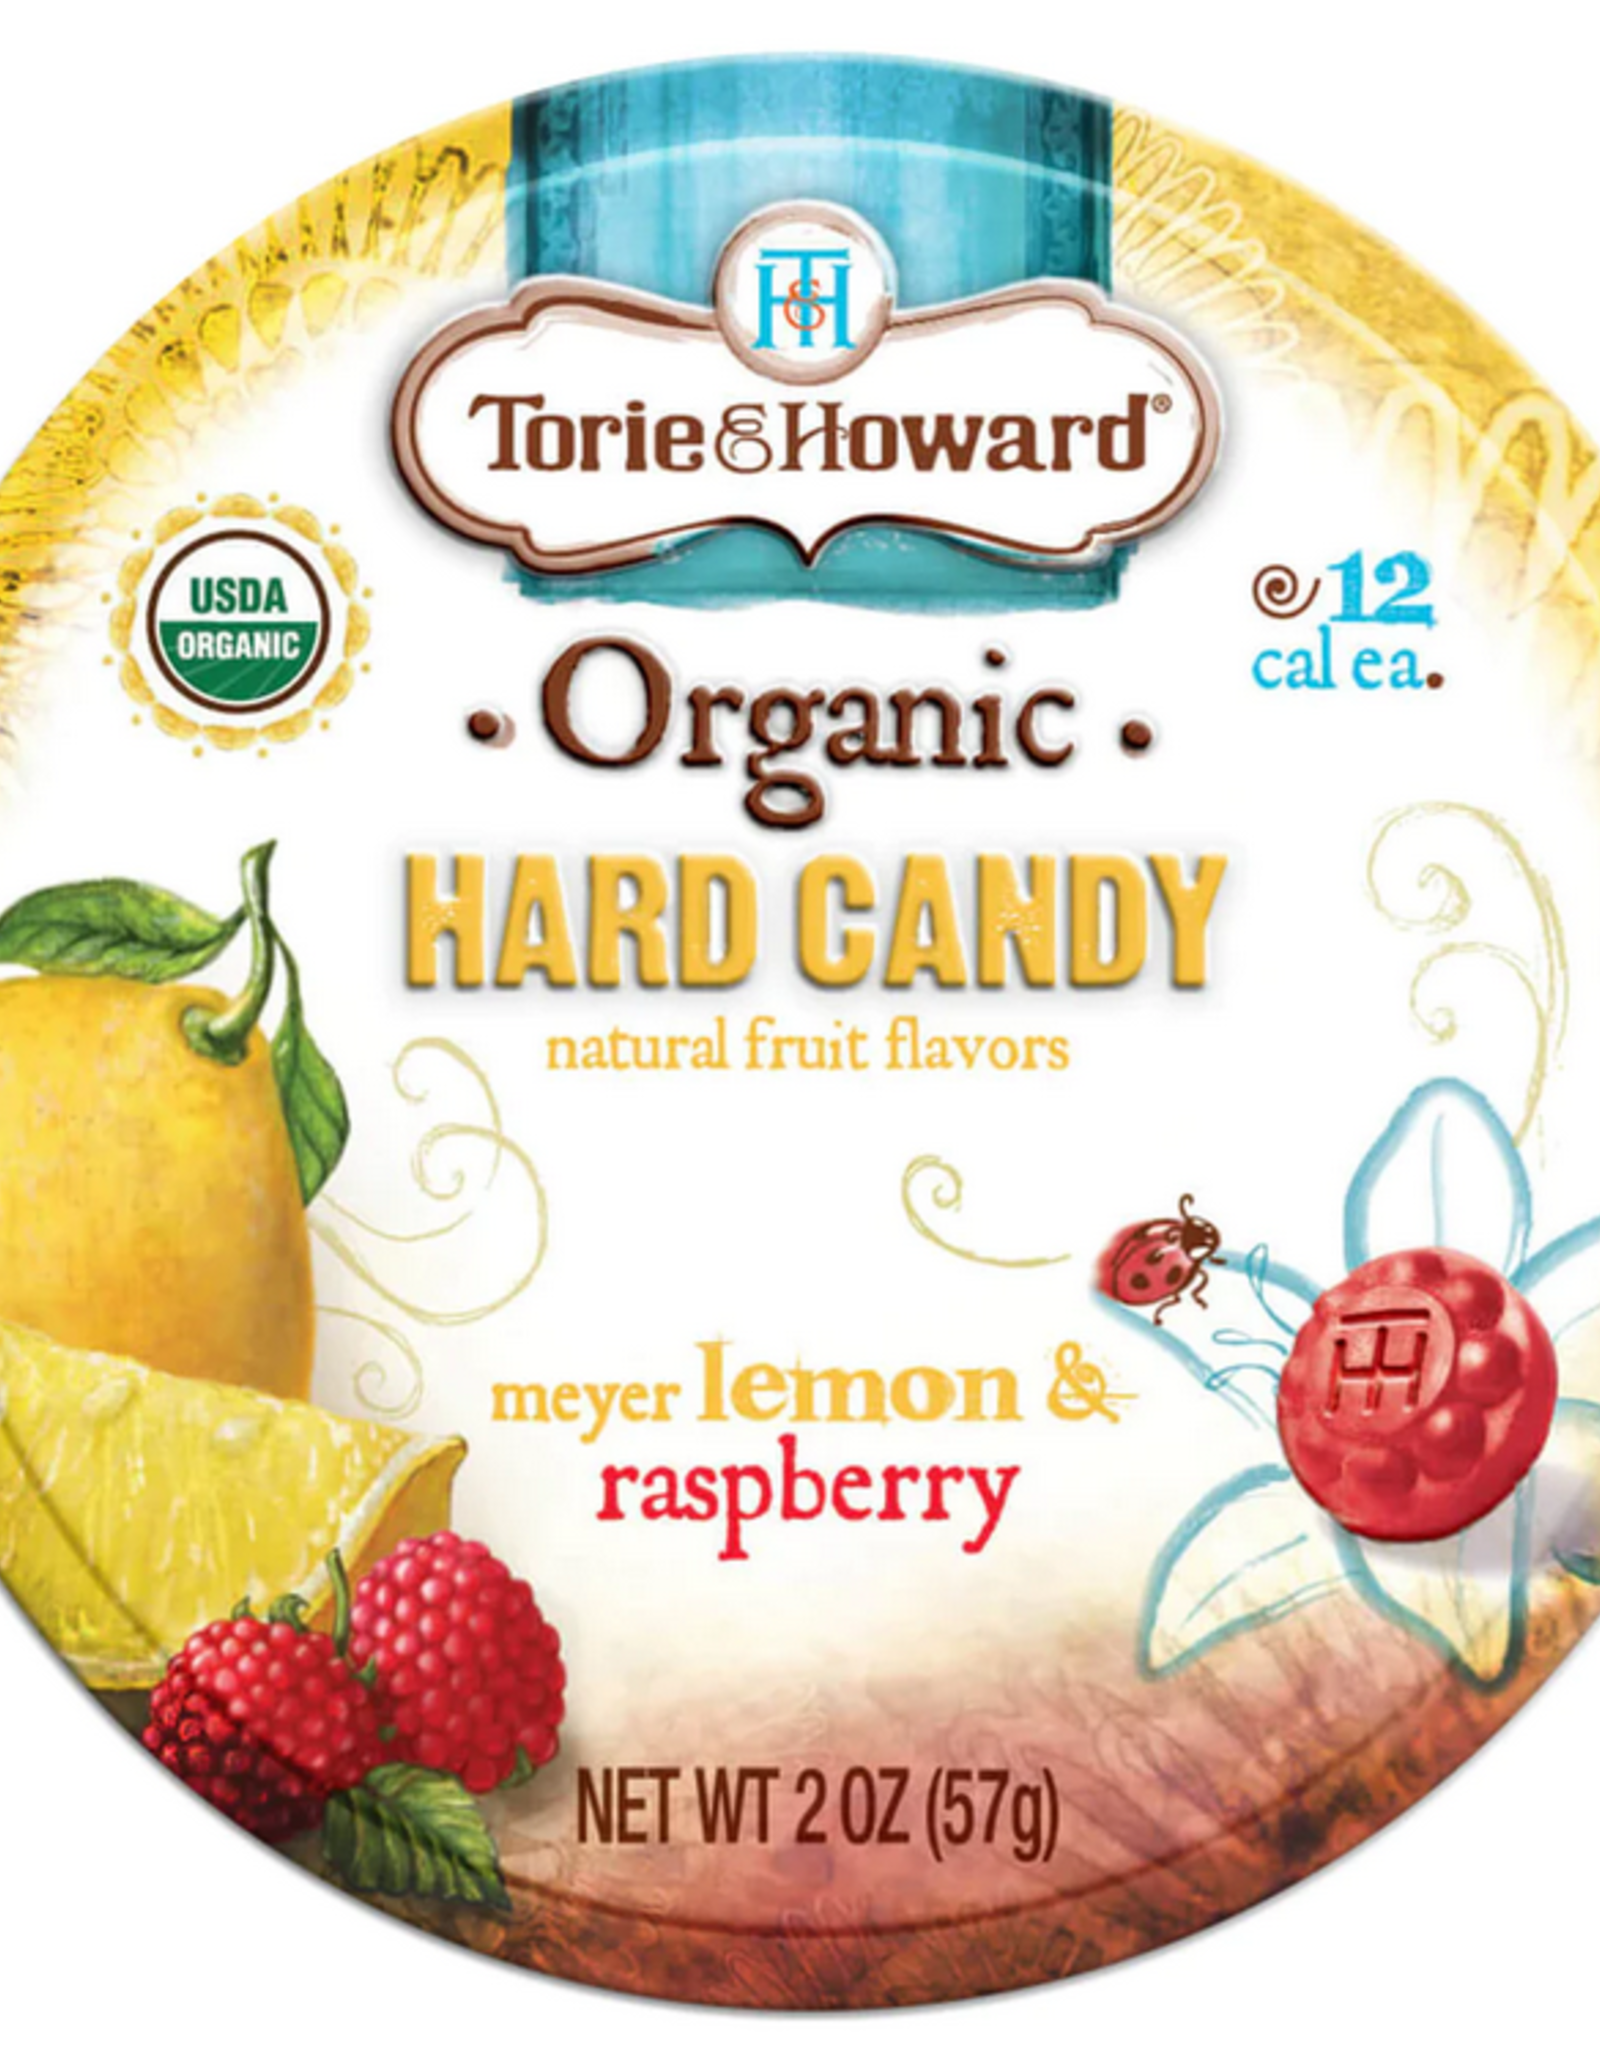 Torie & Howard Meyer Lemon and Raspberry Organic Hard Candy Tins 2 oz